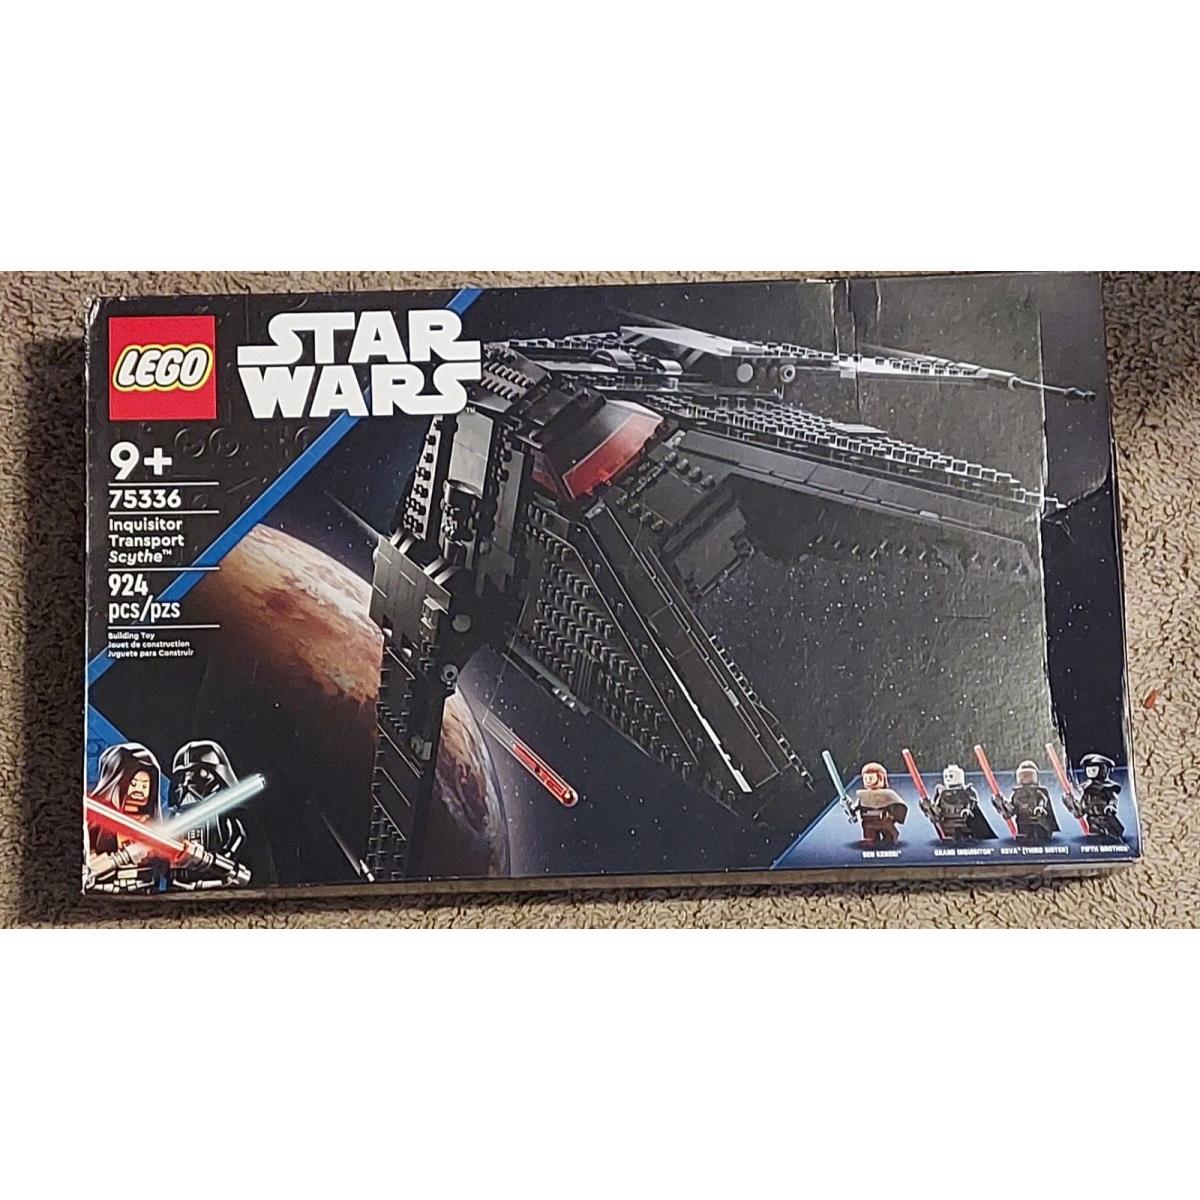 Lego Star Wars Inquisitor Transport Scythe 75336 Building Set Box